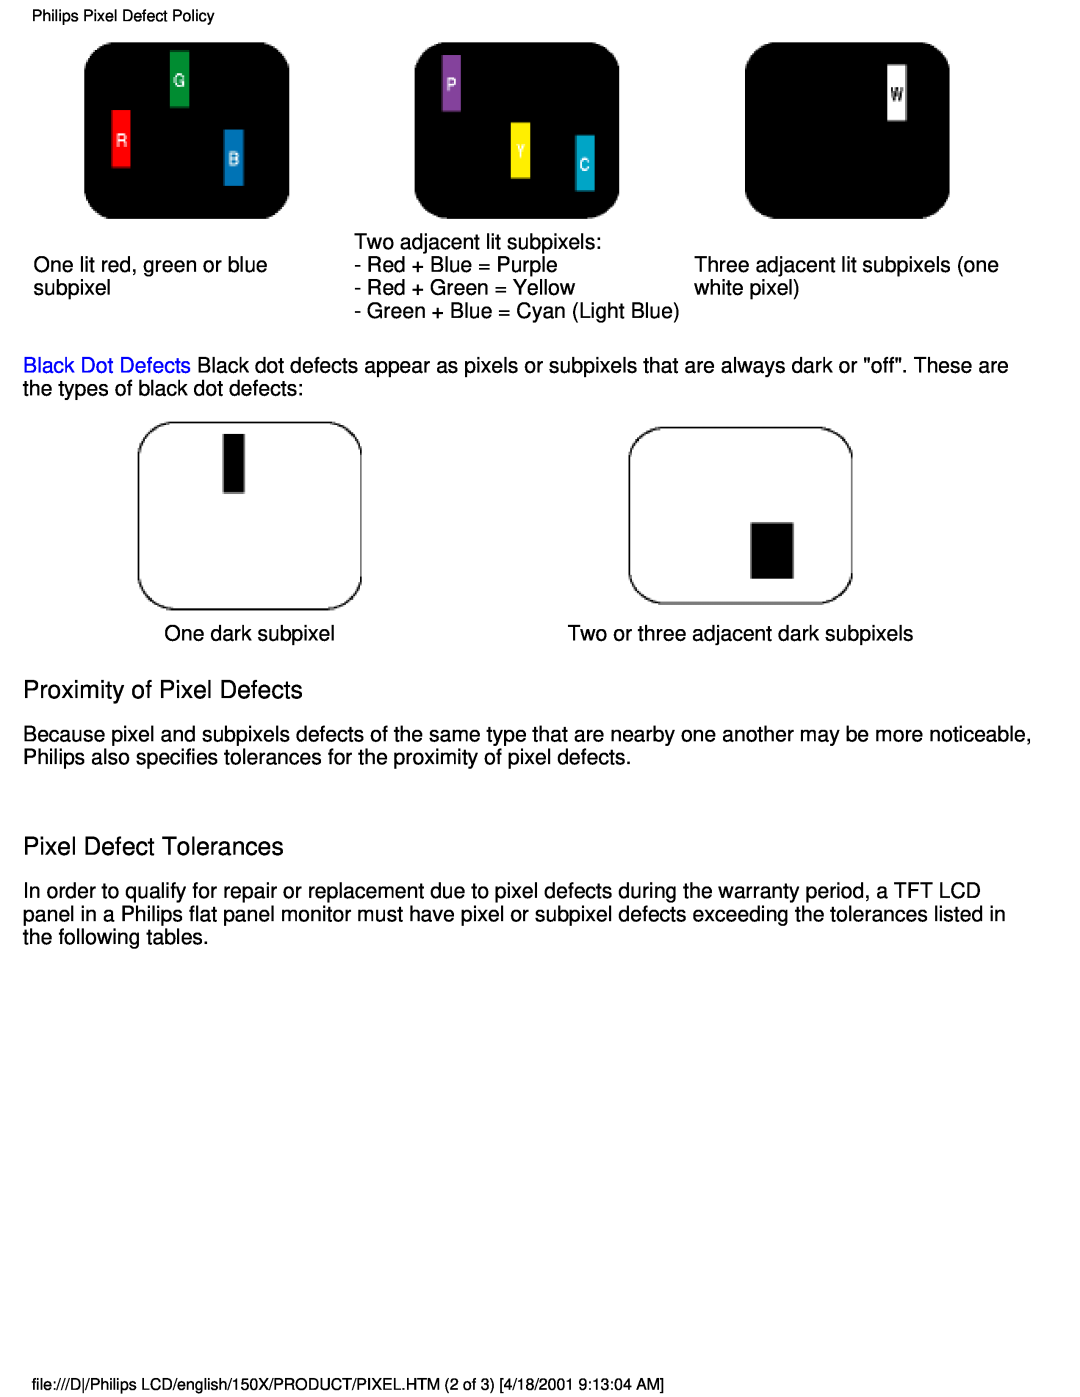 Philips 150X user manual Proximity of Pixel Defects, Pixel Defect Tolerances 